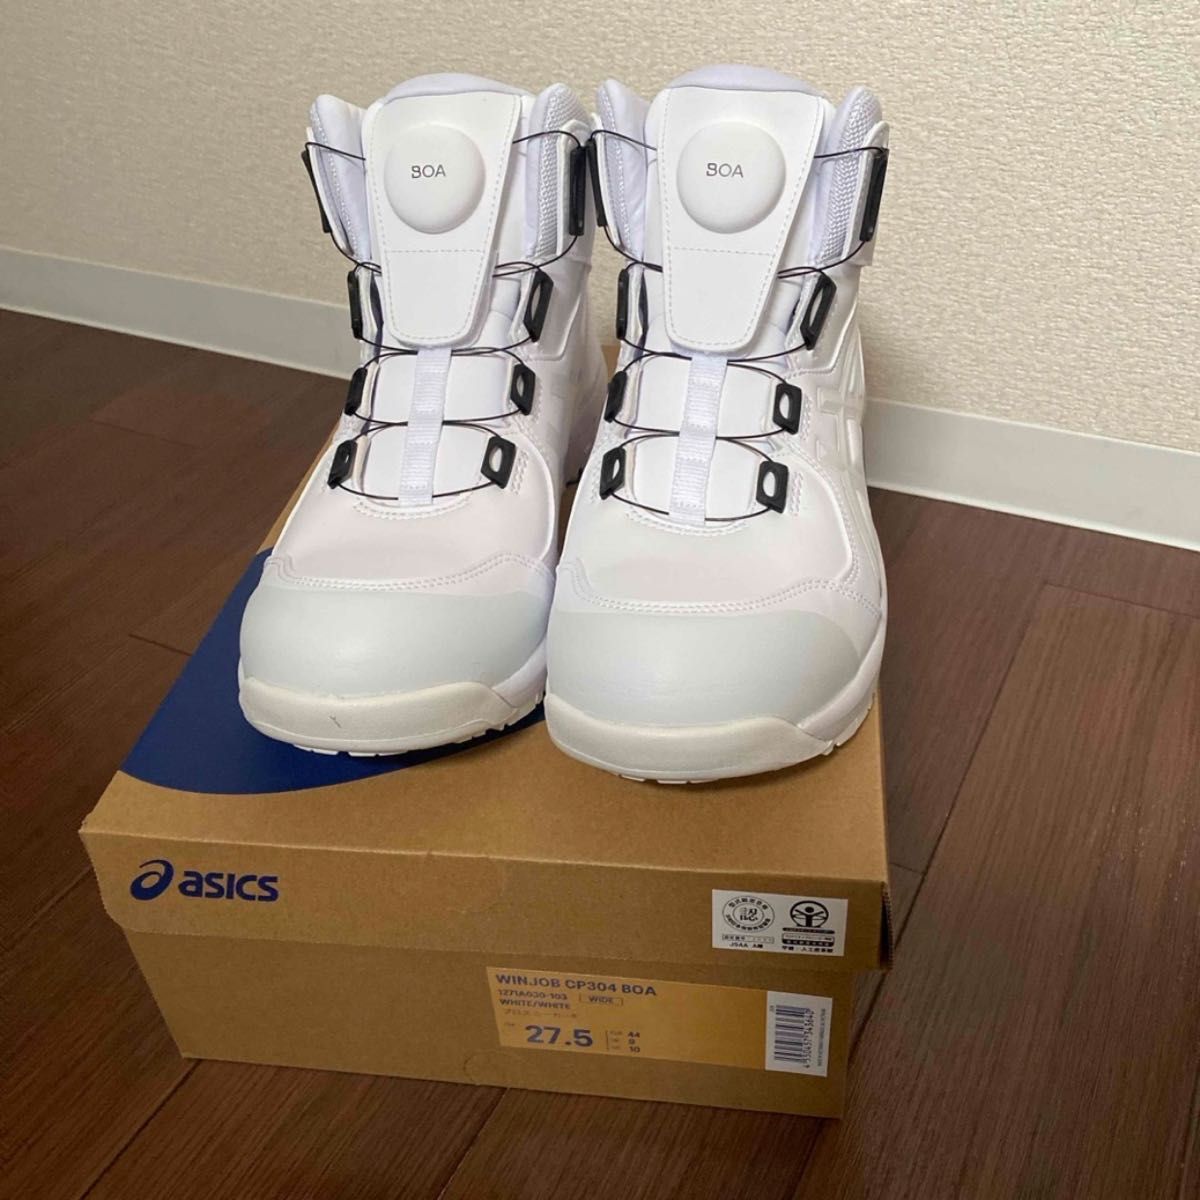 ASICS アシックス 安全靴 ウィンジョブ CP304 BOA 限定色